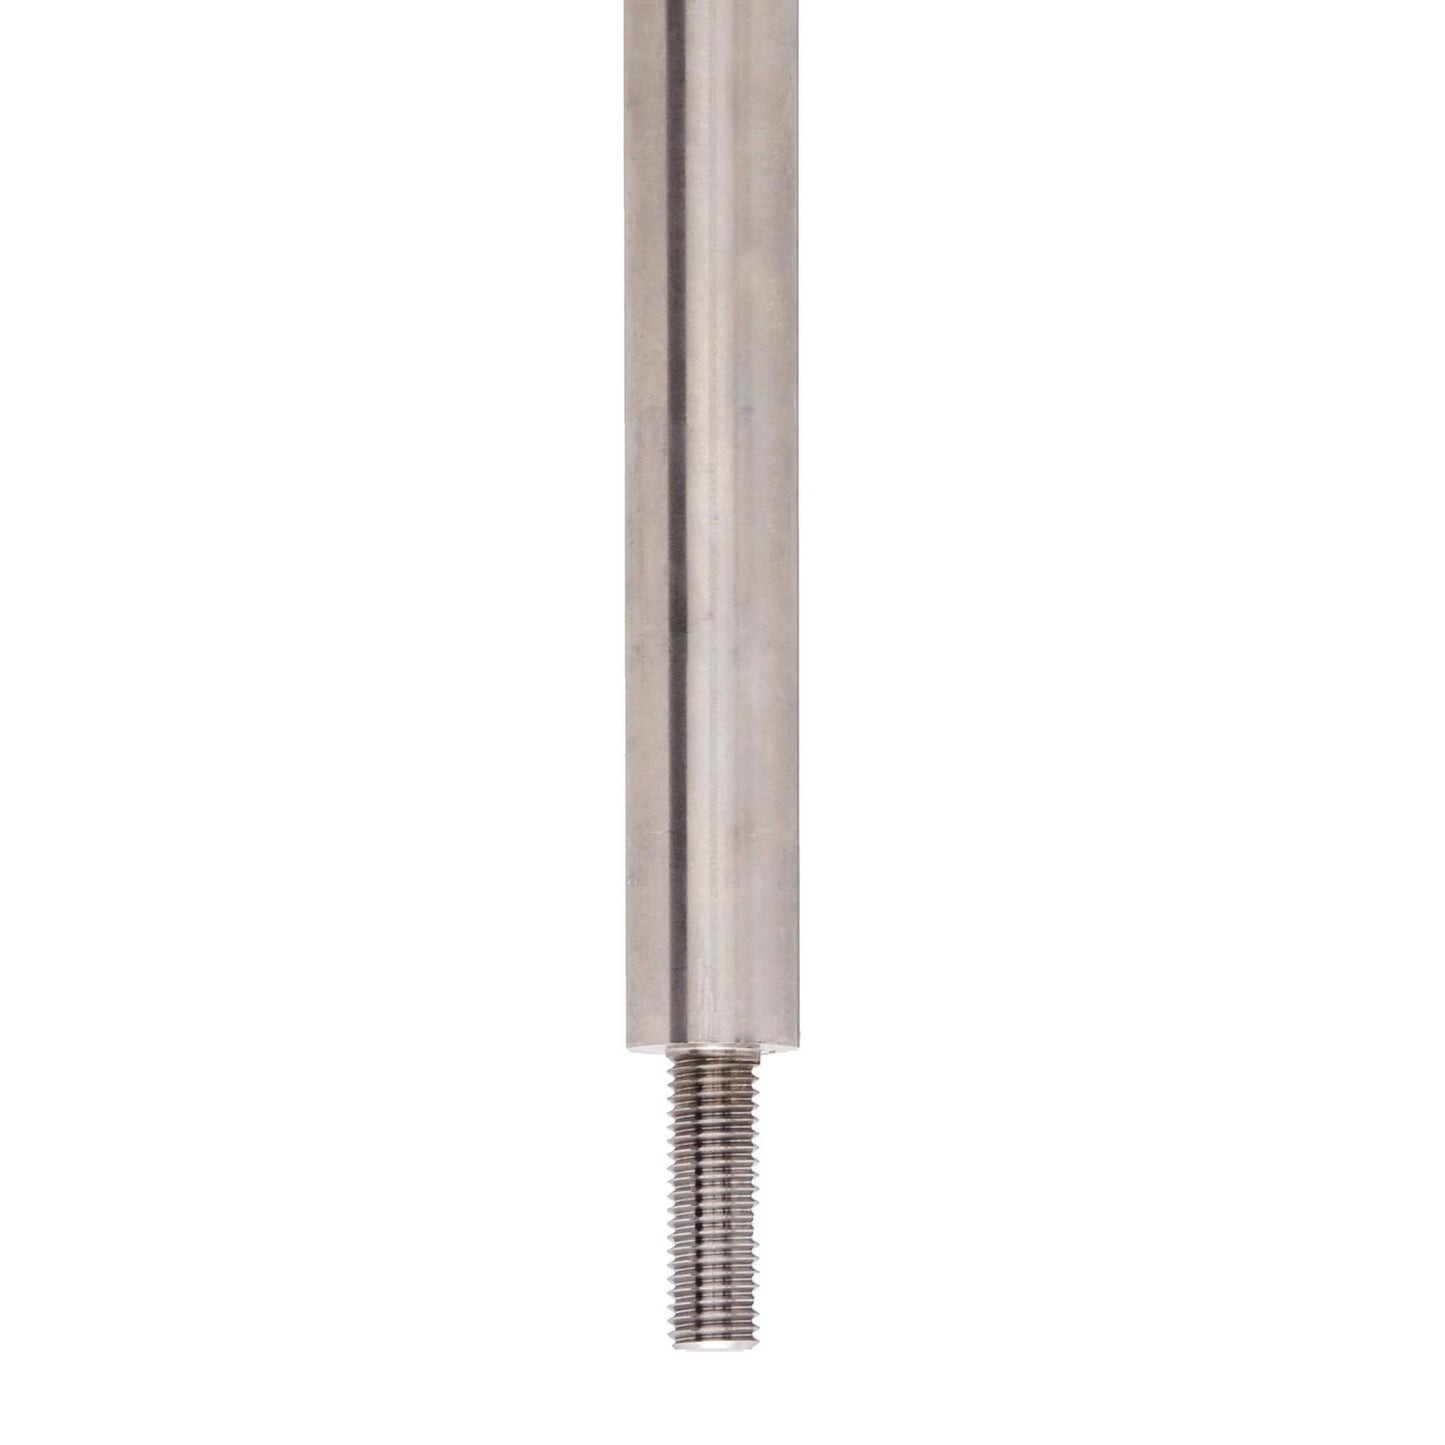 Medium Screw Plug Stanchion - 724mm high